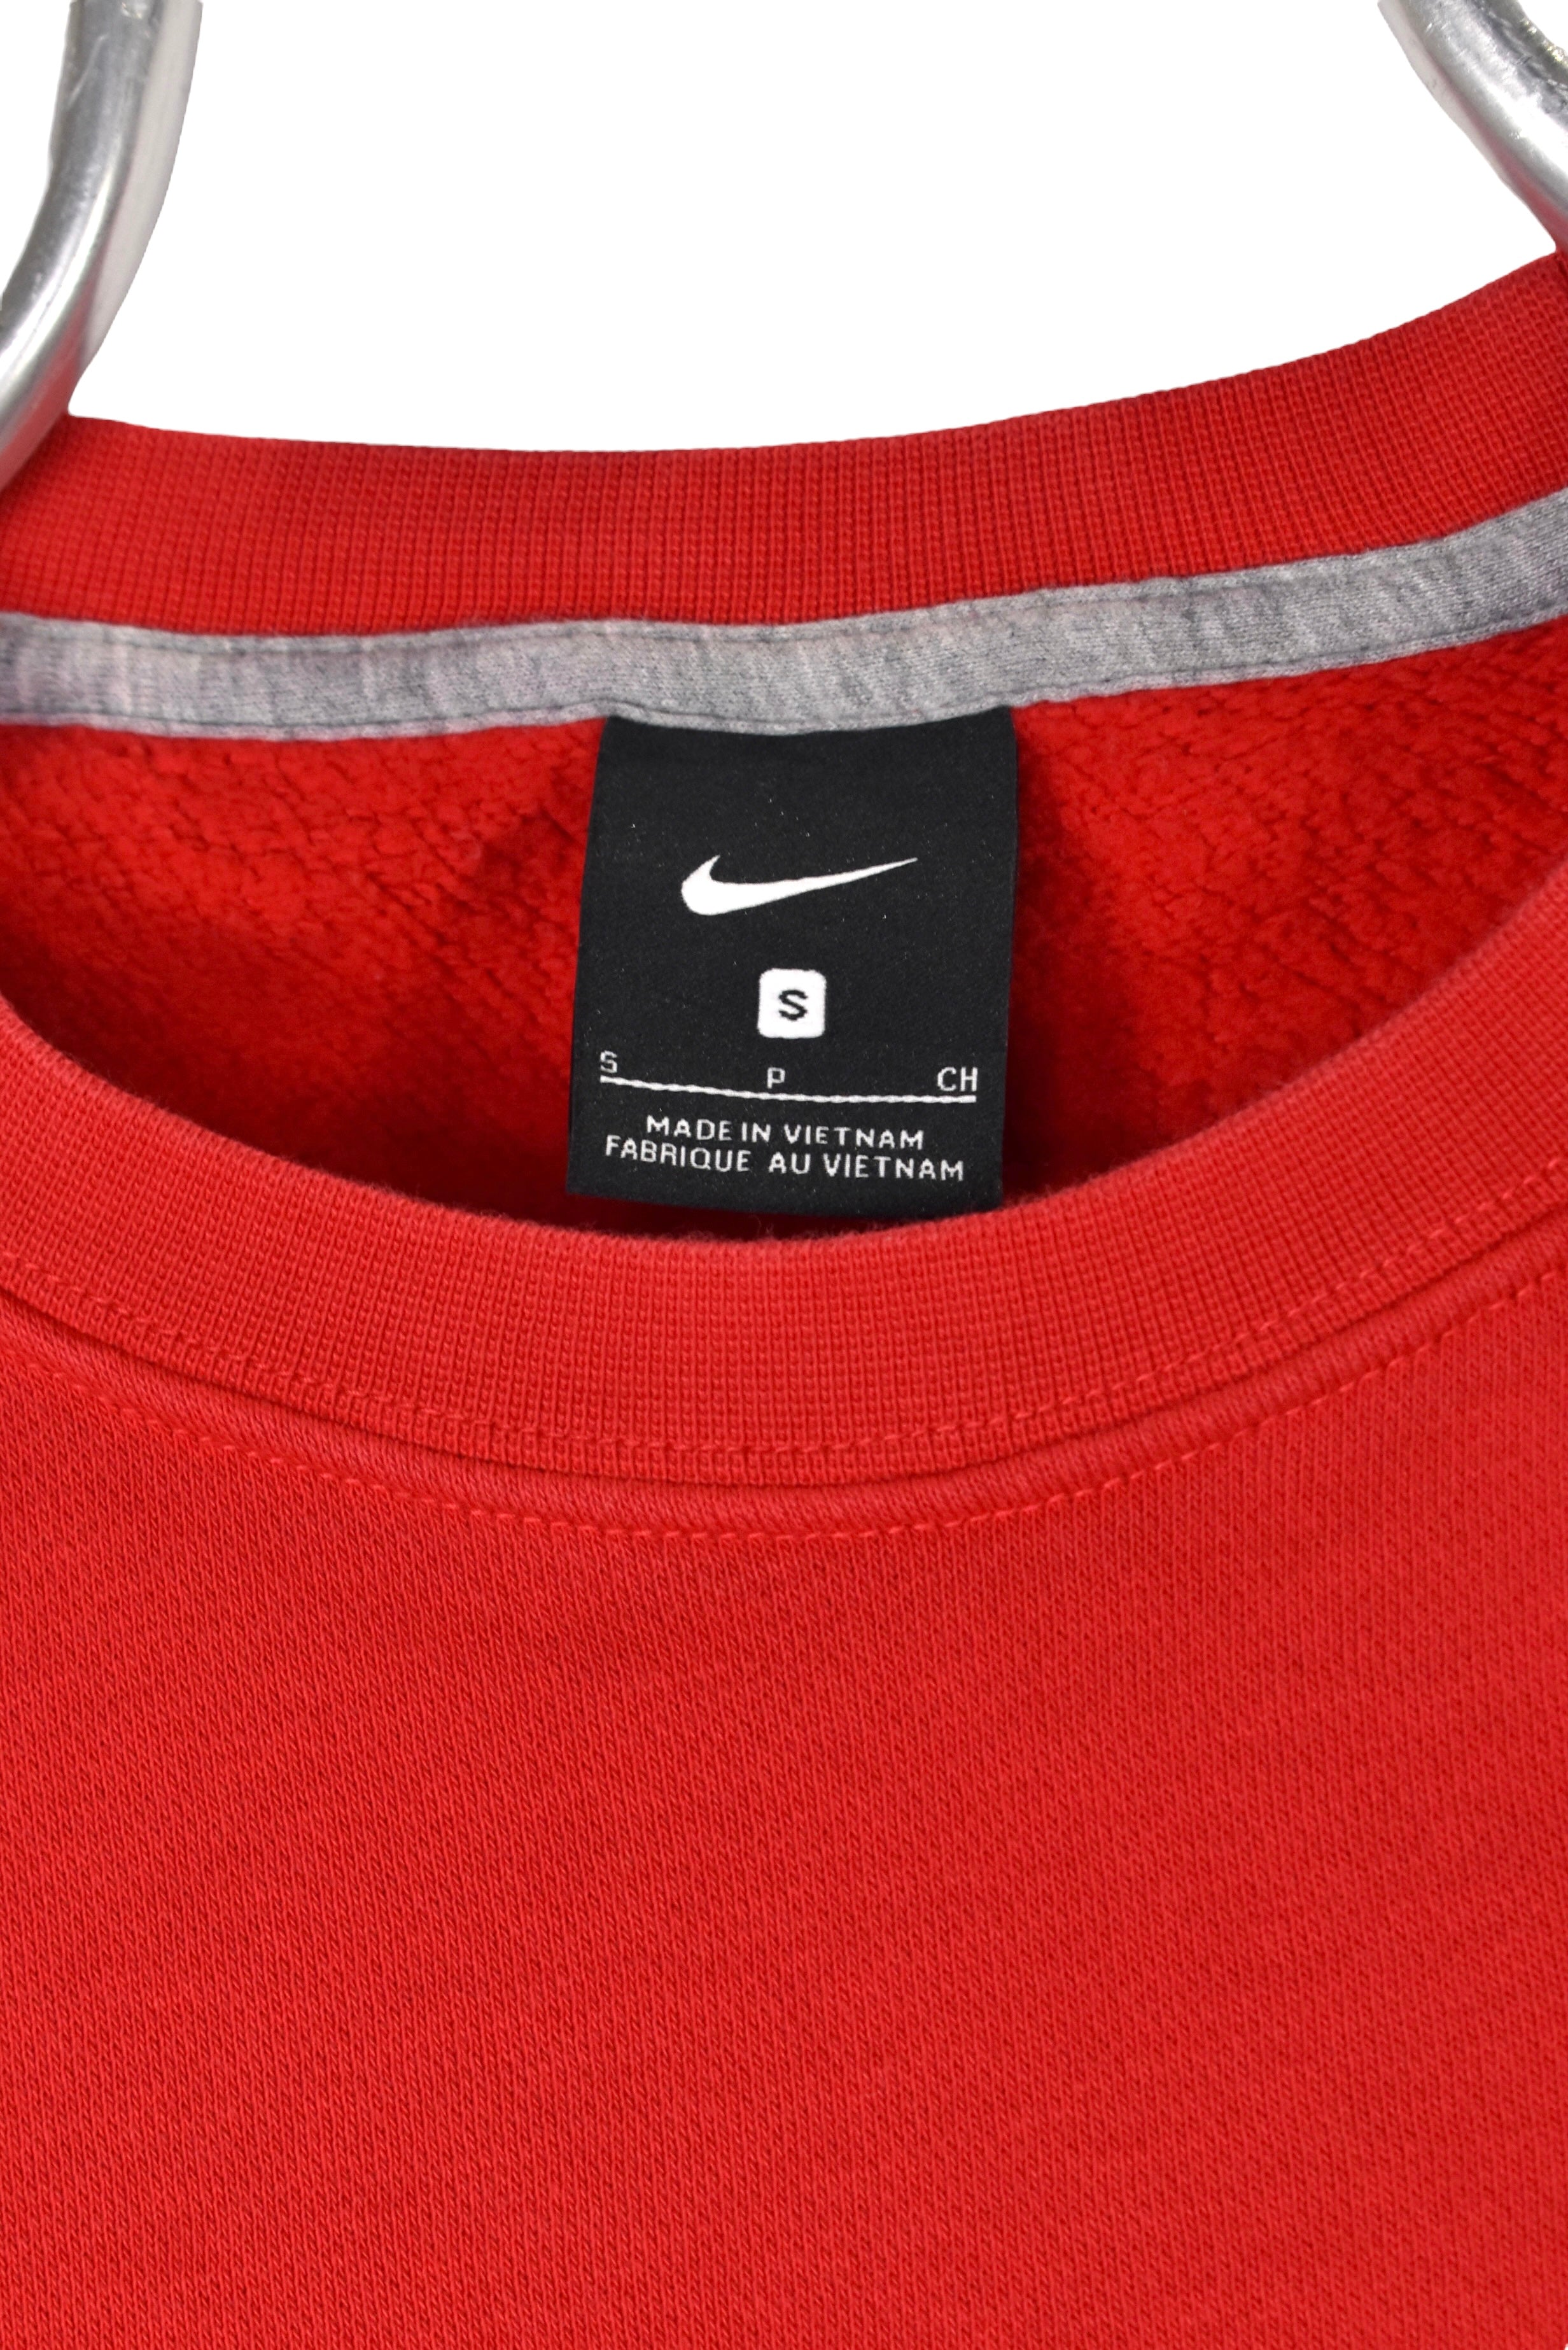 Vintage Georgia Bulldogs sweatshirt (M), red Nike embroidered crewneck